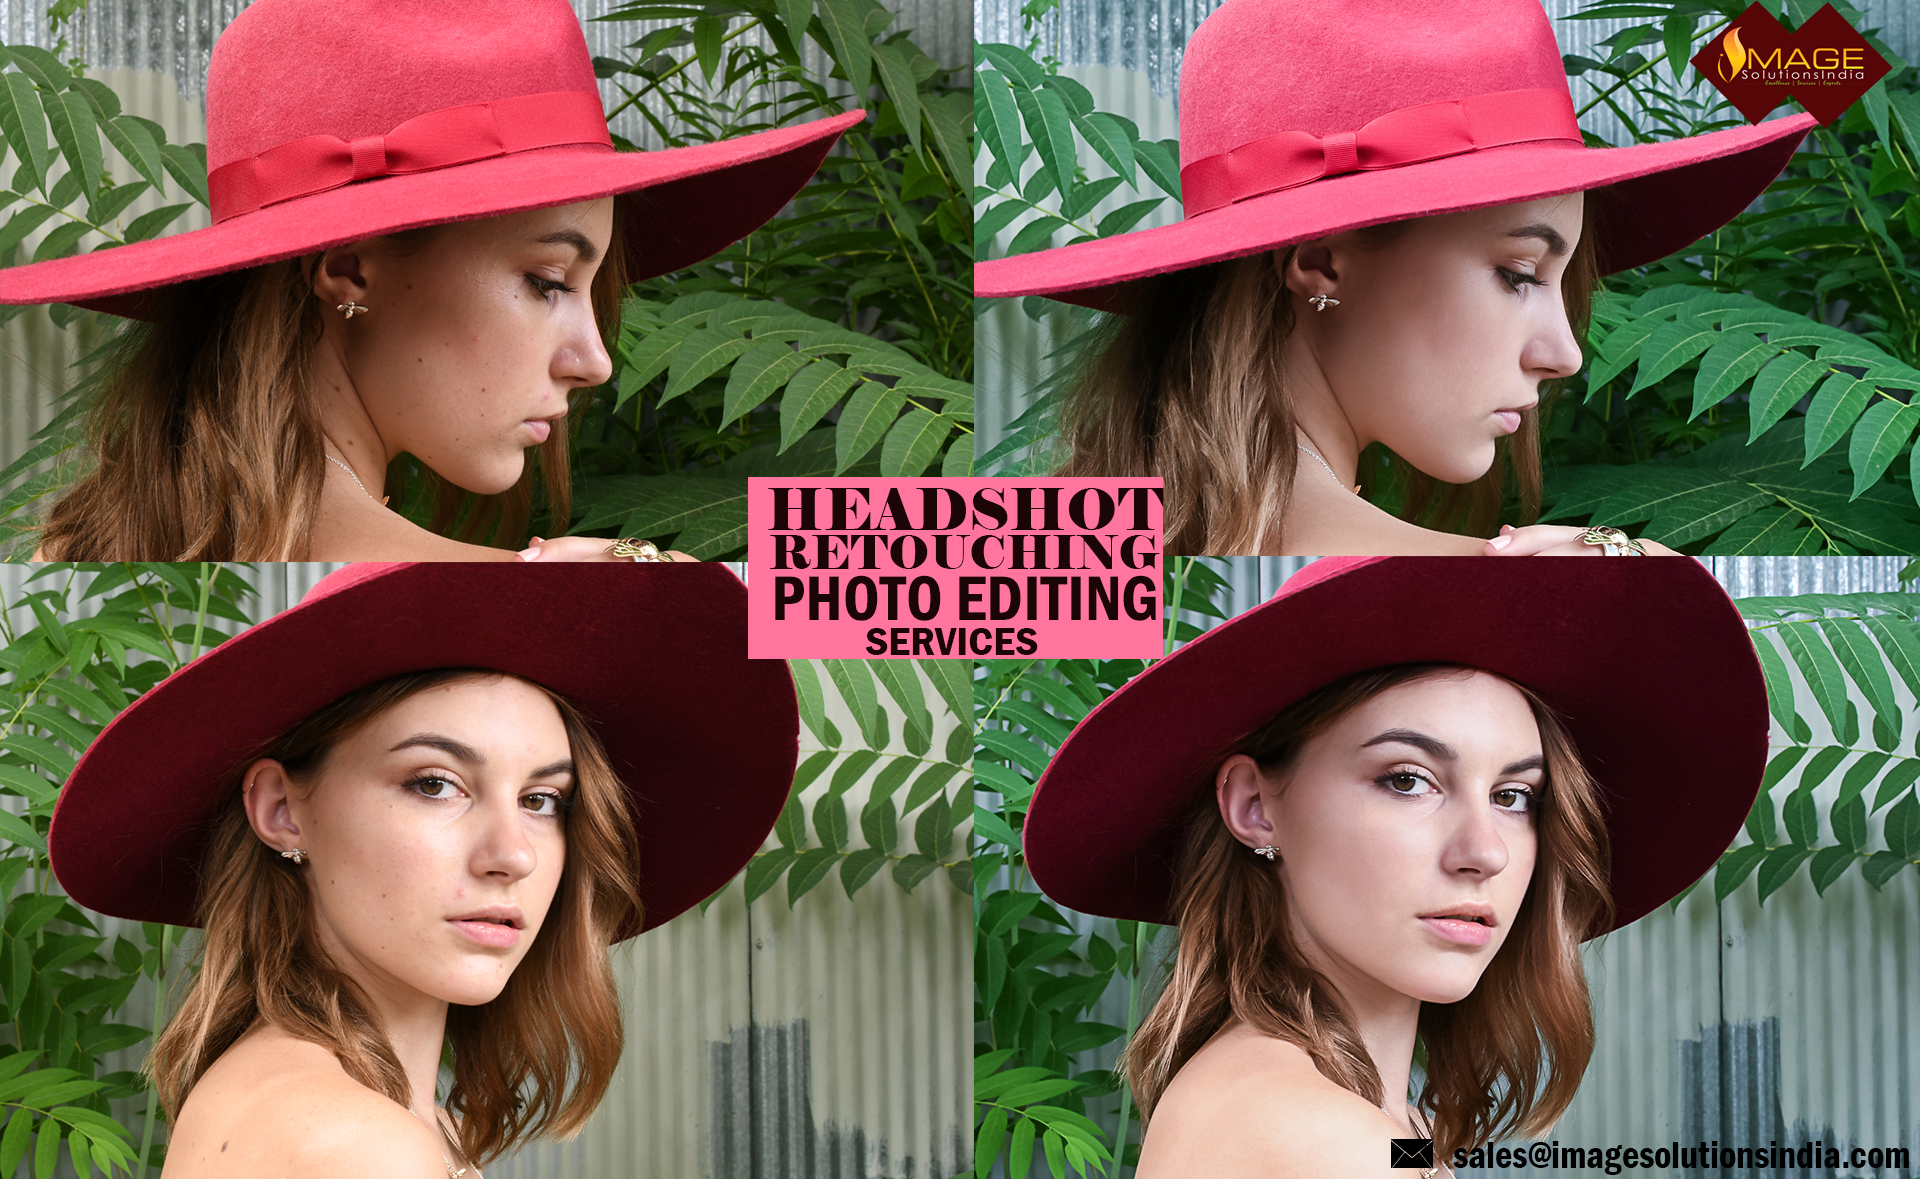 Headshot Photo Retouching Services for Professional Portrait Photographers